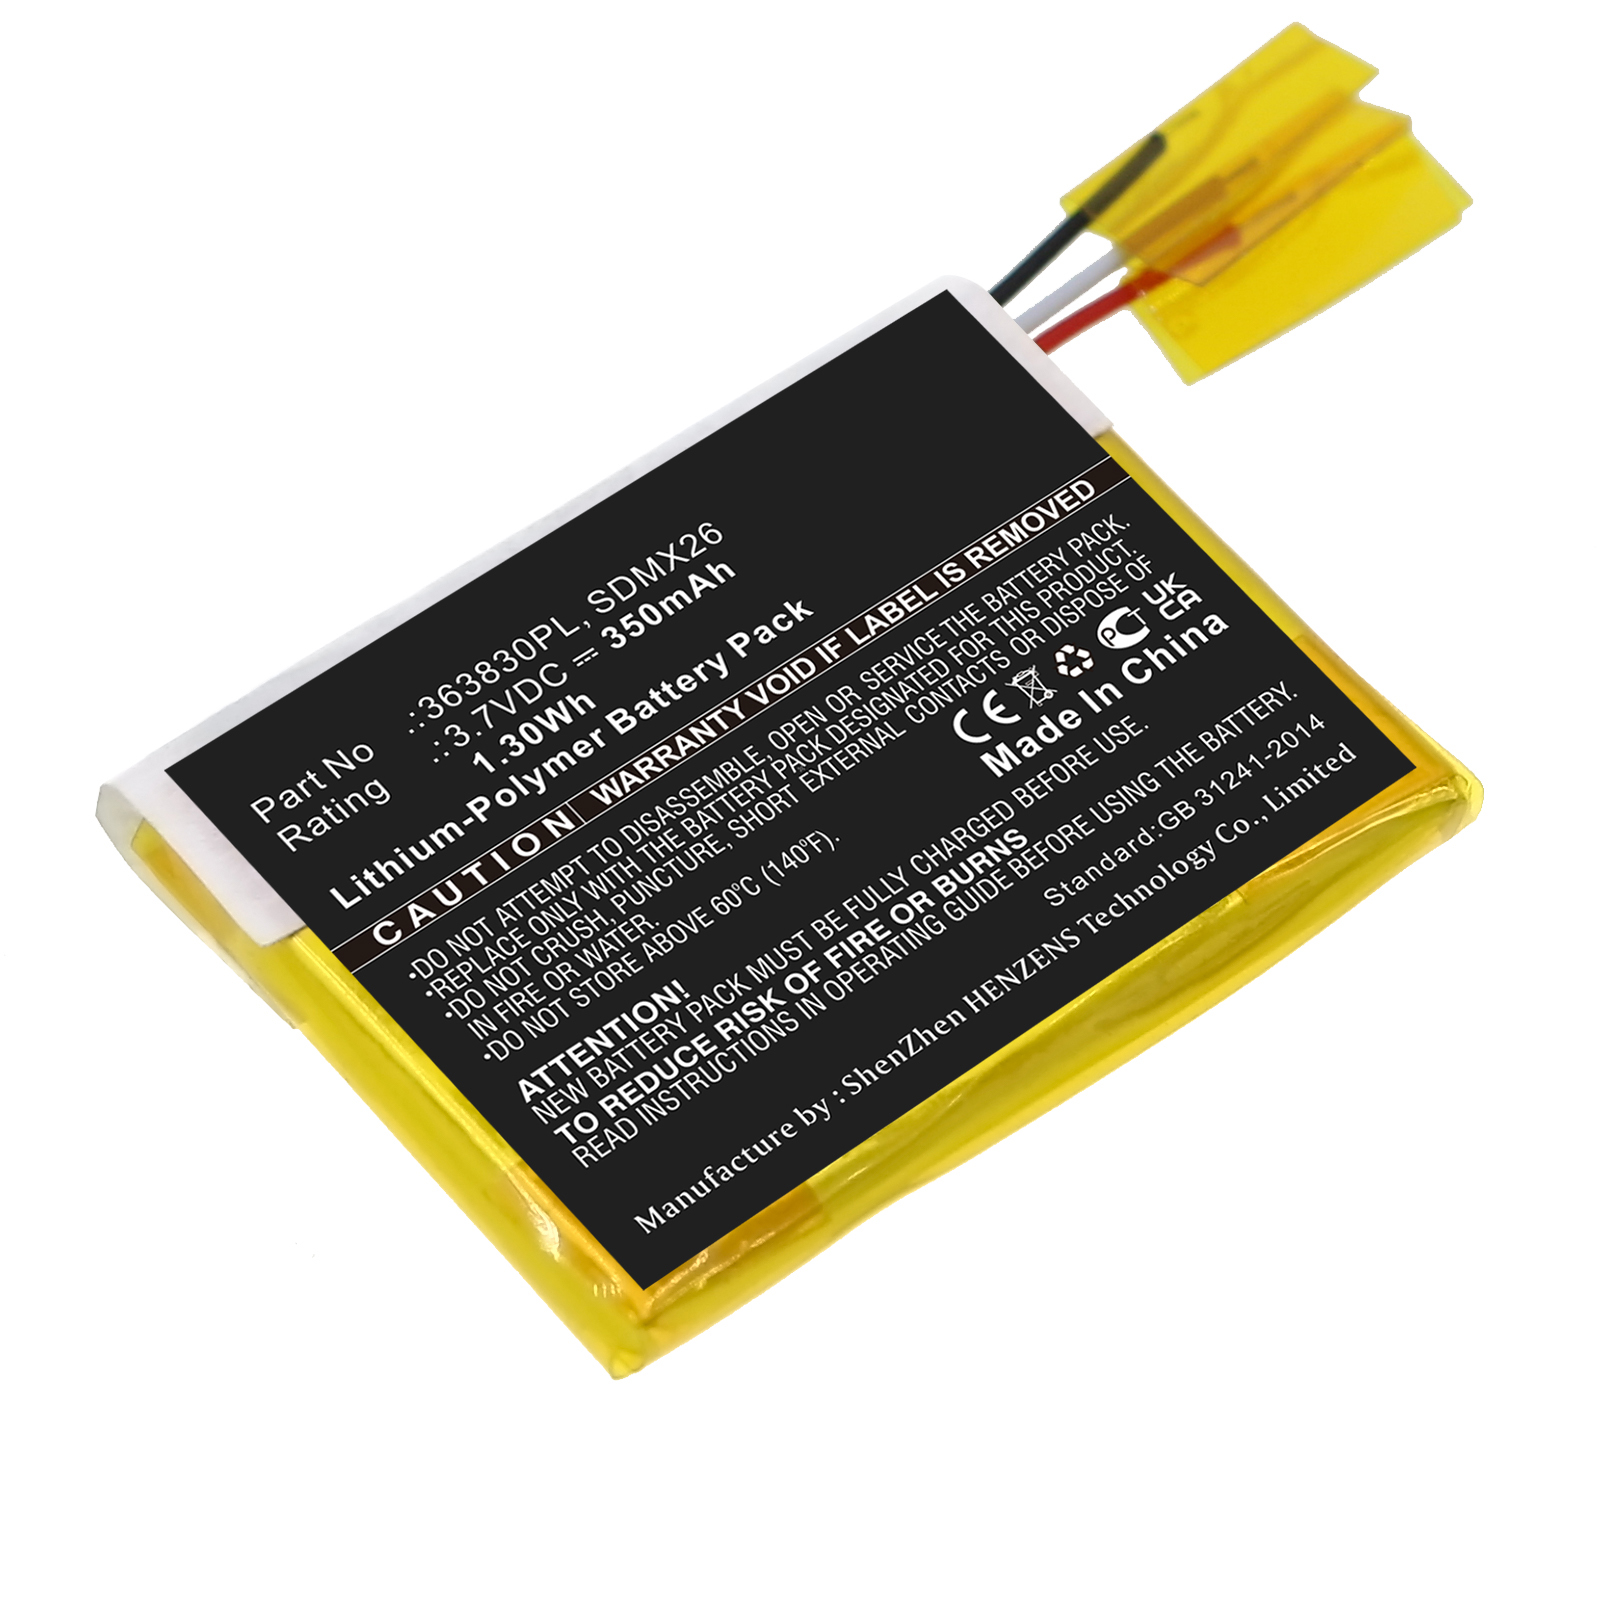 Synergy Digital Player Battery, Compatible with Sandisk 363830PL Player Battery (Li-Pol, 3.7V, 350mAh)